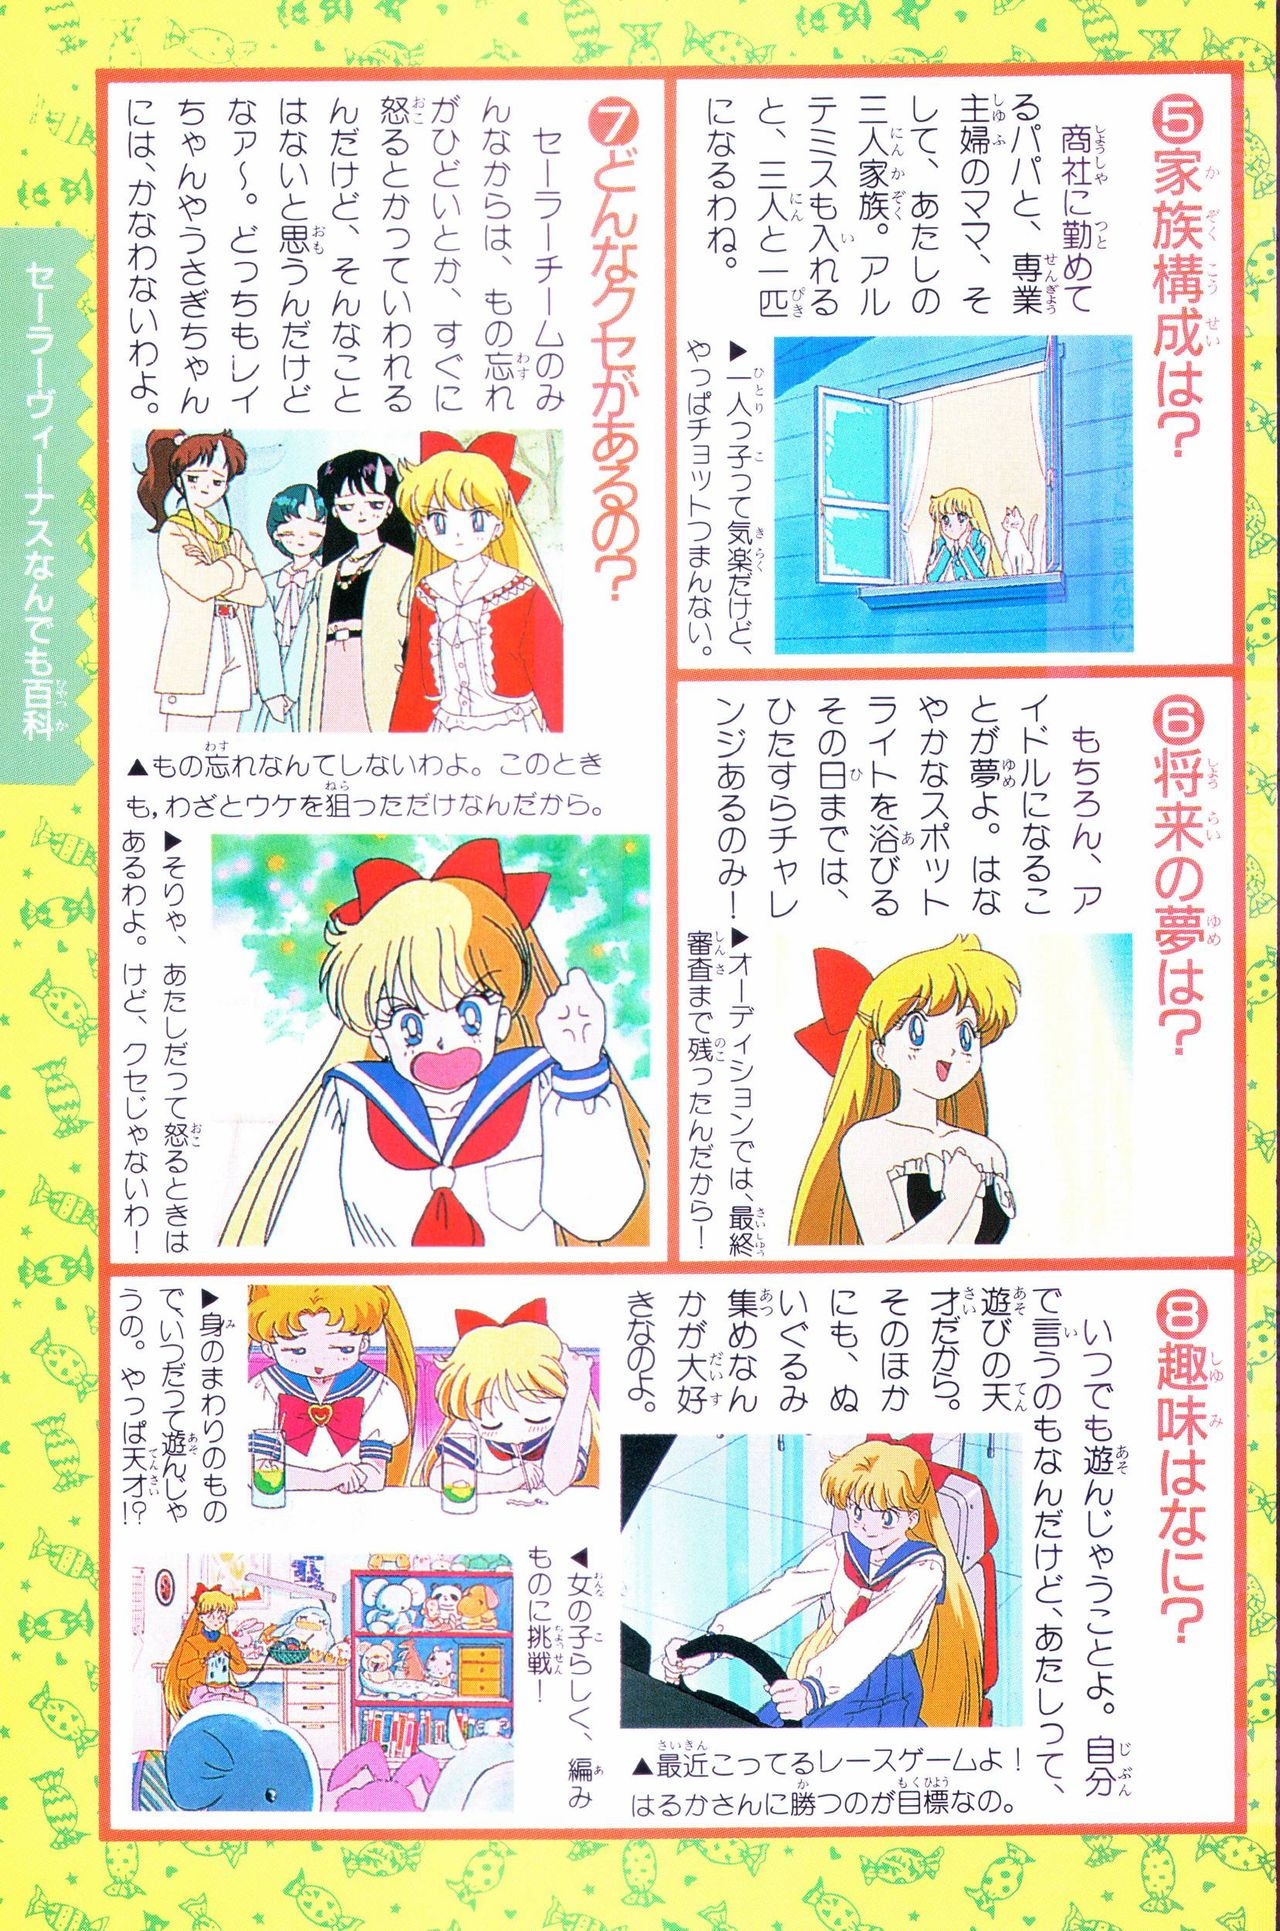 Sailor Moon Official Fan Book - Sailor Venus 37